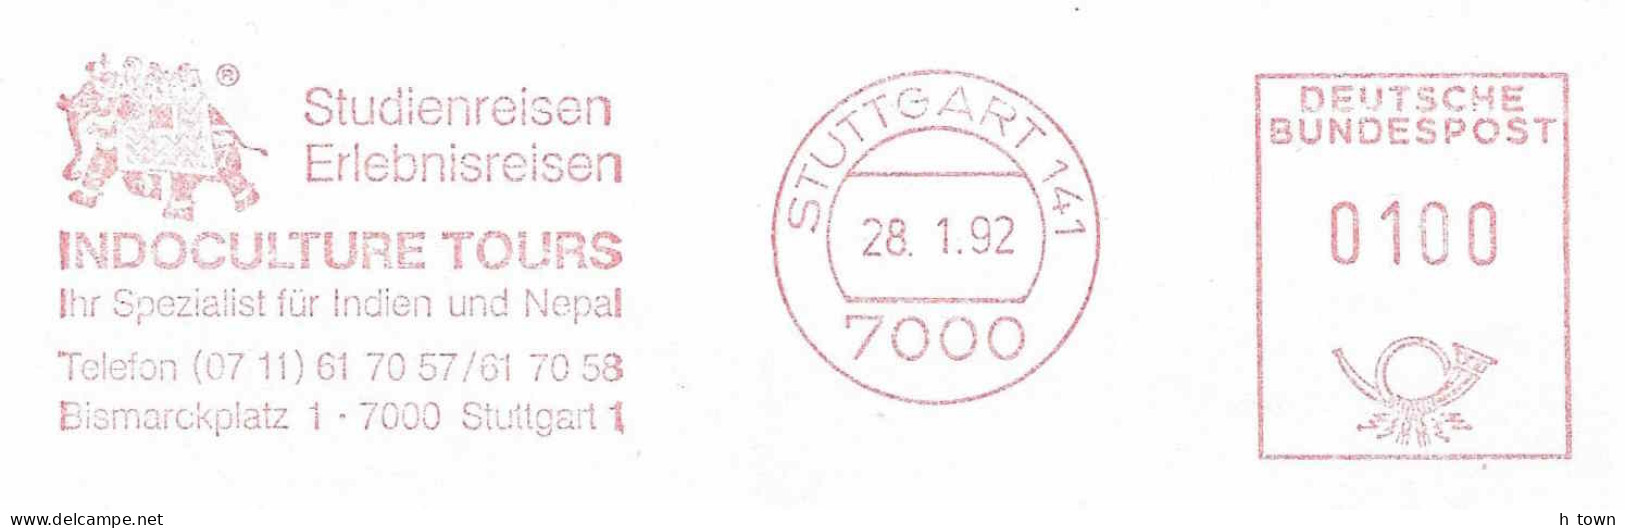 414  Elephant: Ema D'Allemagne, 1992 - Tourism, India: Meter Stamp From Stuttgart, Germany - Elephants